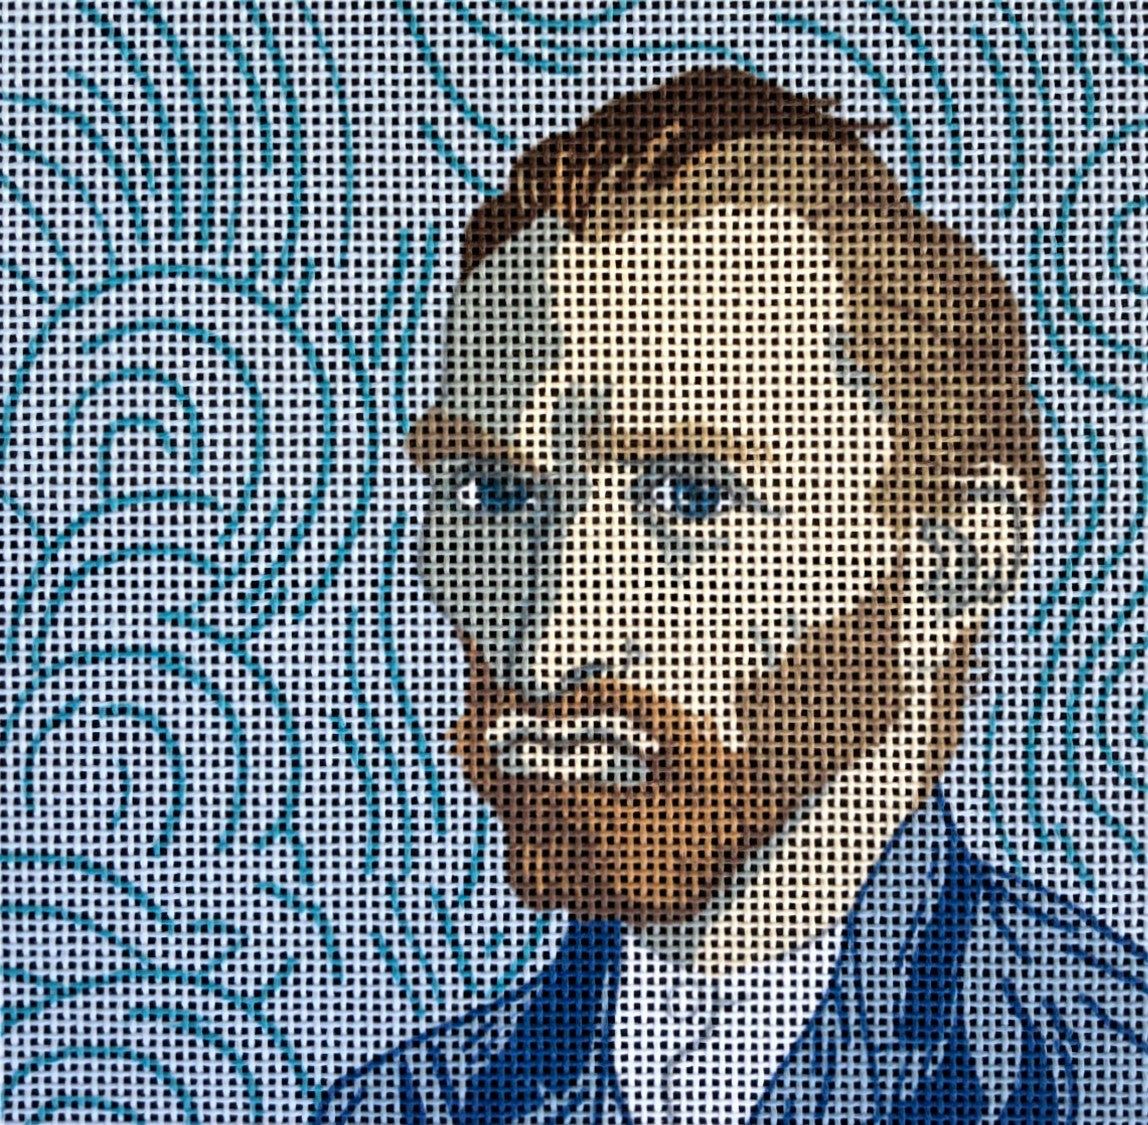 Van Gogh art needlepoint design